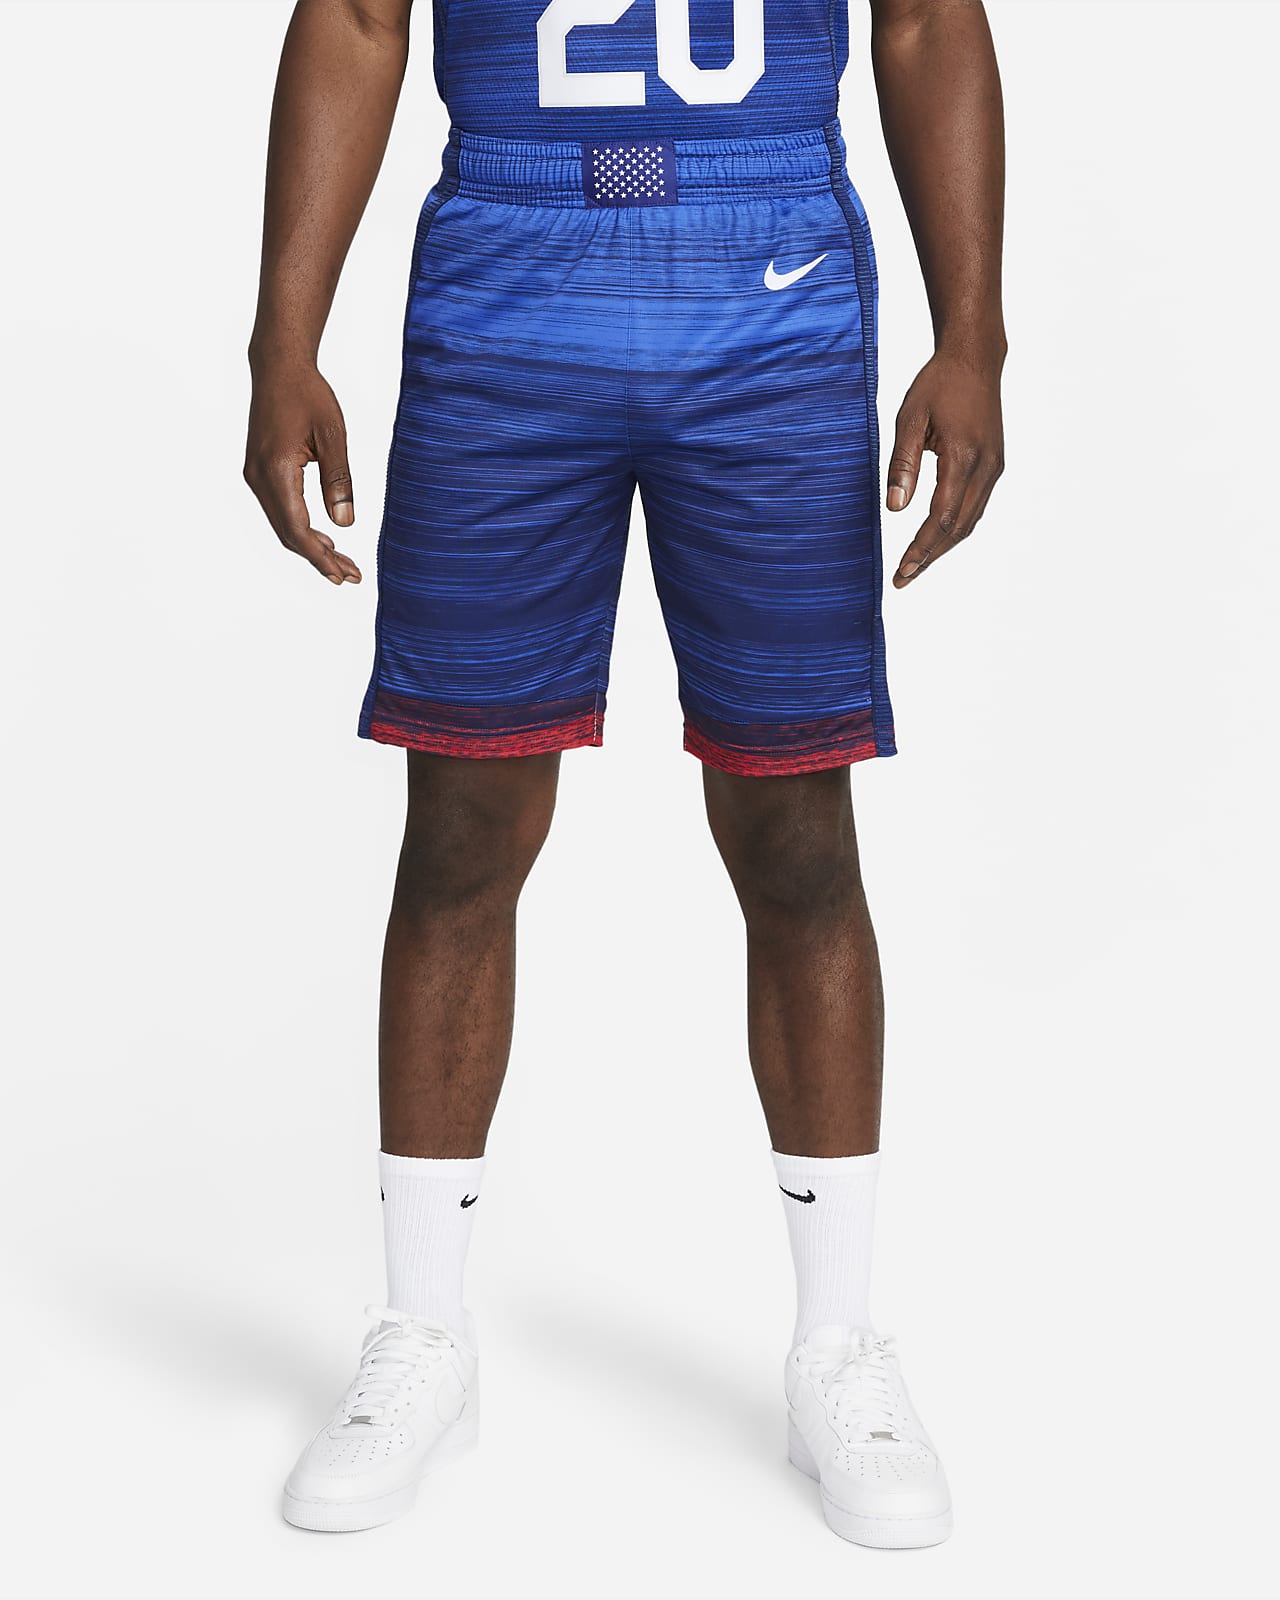 Shorts de básquetbol para hombre Nike Team USA Authentic (Road). 